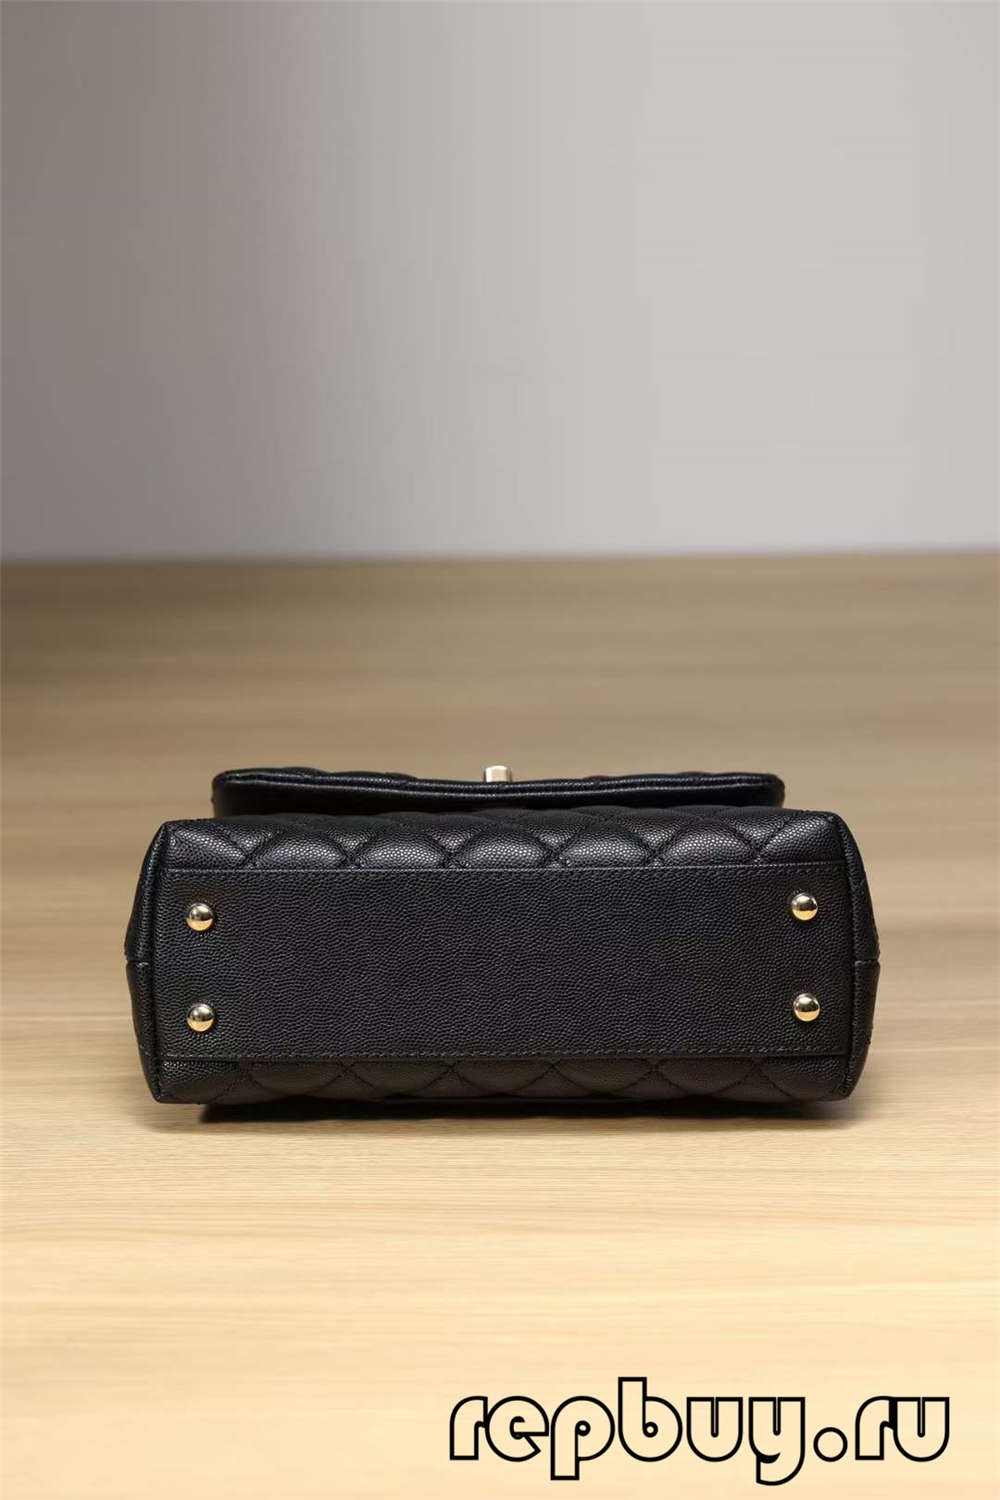 Chanel Coco Handle ထိပ်တန်းပုံစံတူလက်ကိုင်အိတ် Black Gold Buckle Look (2022 Updated)-အကောင်းဆုံးအရည်အသွေးအတု Louis Vuitton Bag အွန်လိုင်းစတိုး၊ ပုံစံတူဒီဇိုင်နာအိတ် ru